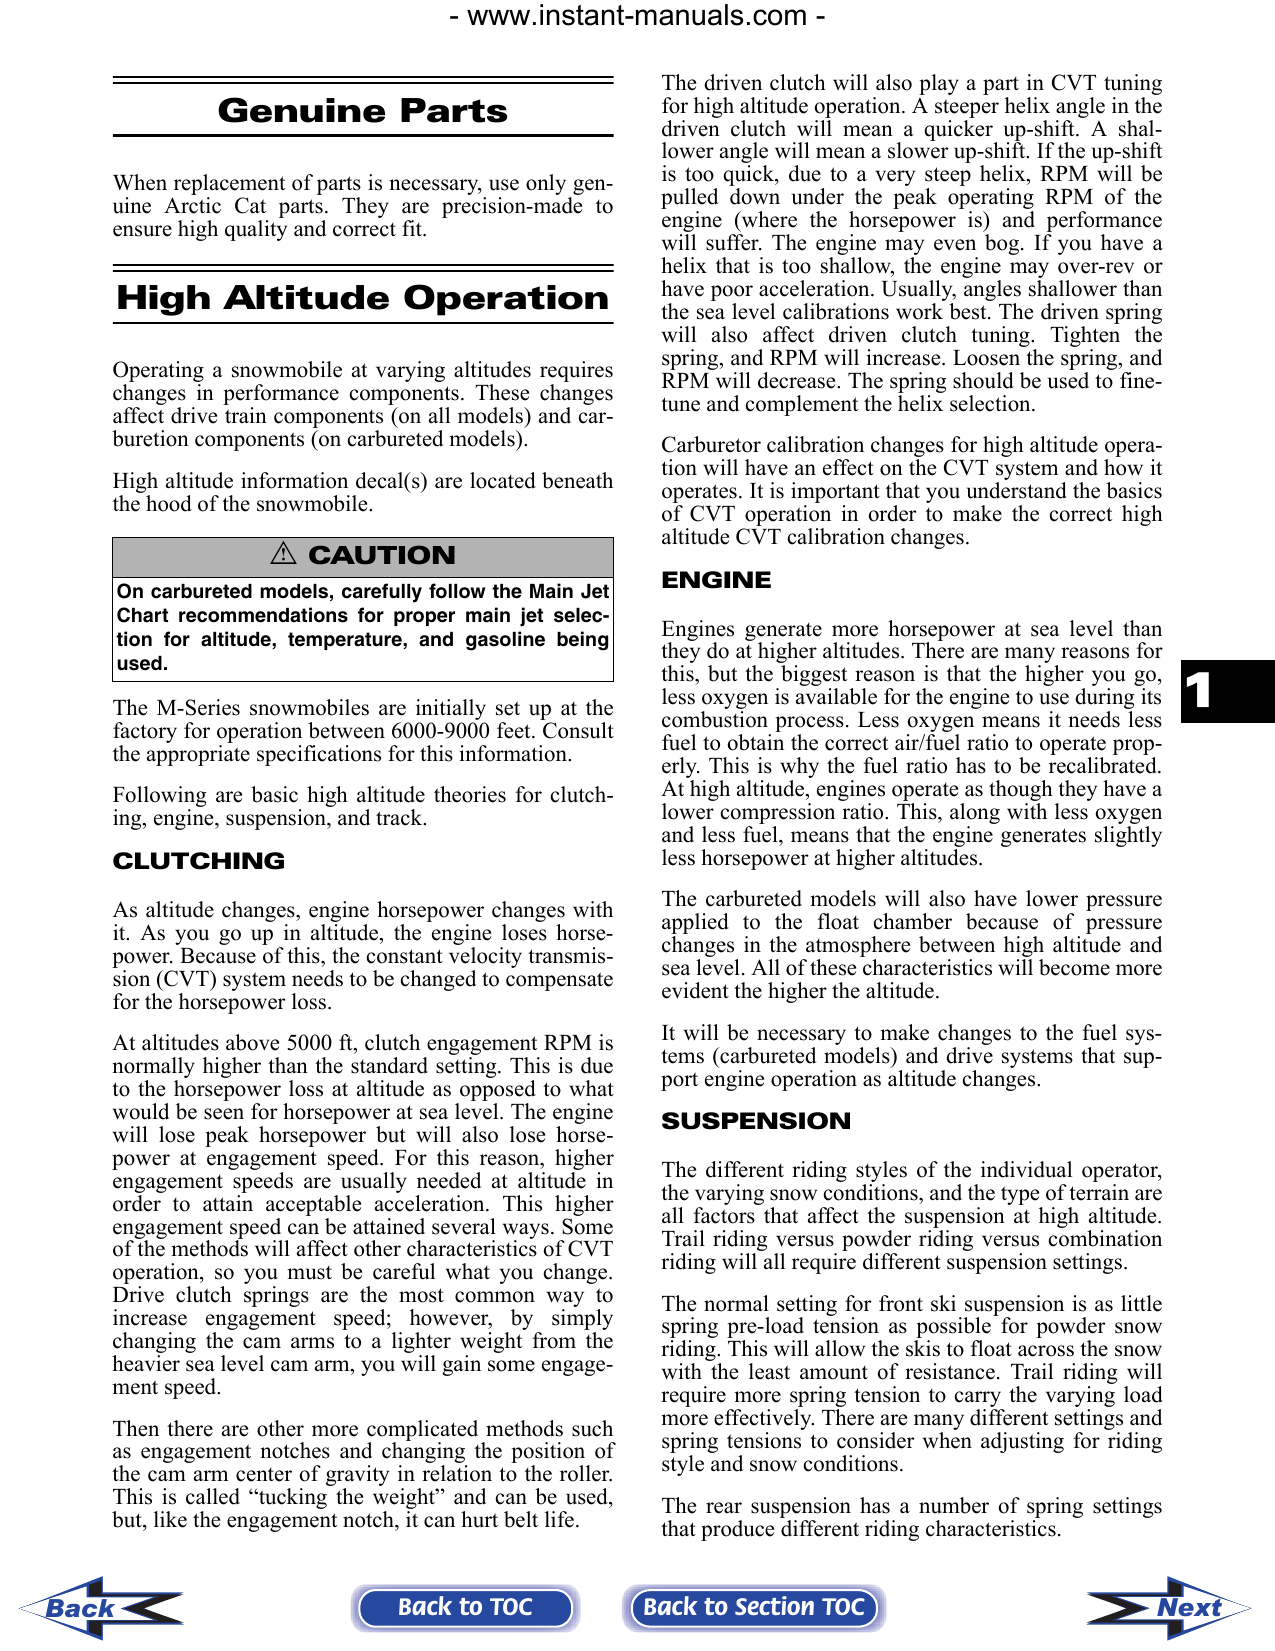 2008 Arctic Cat 370 cc, 570 cc, 500 cc, 600 cc, 800 cc, 1000 cc,  2-stroke snowmobile service repair manual Preview image 5